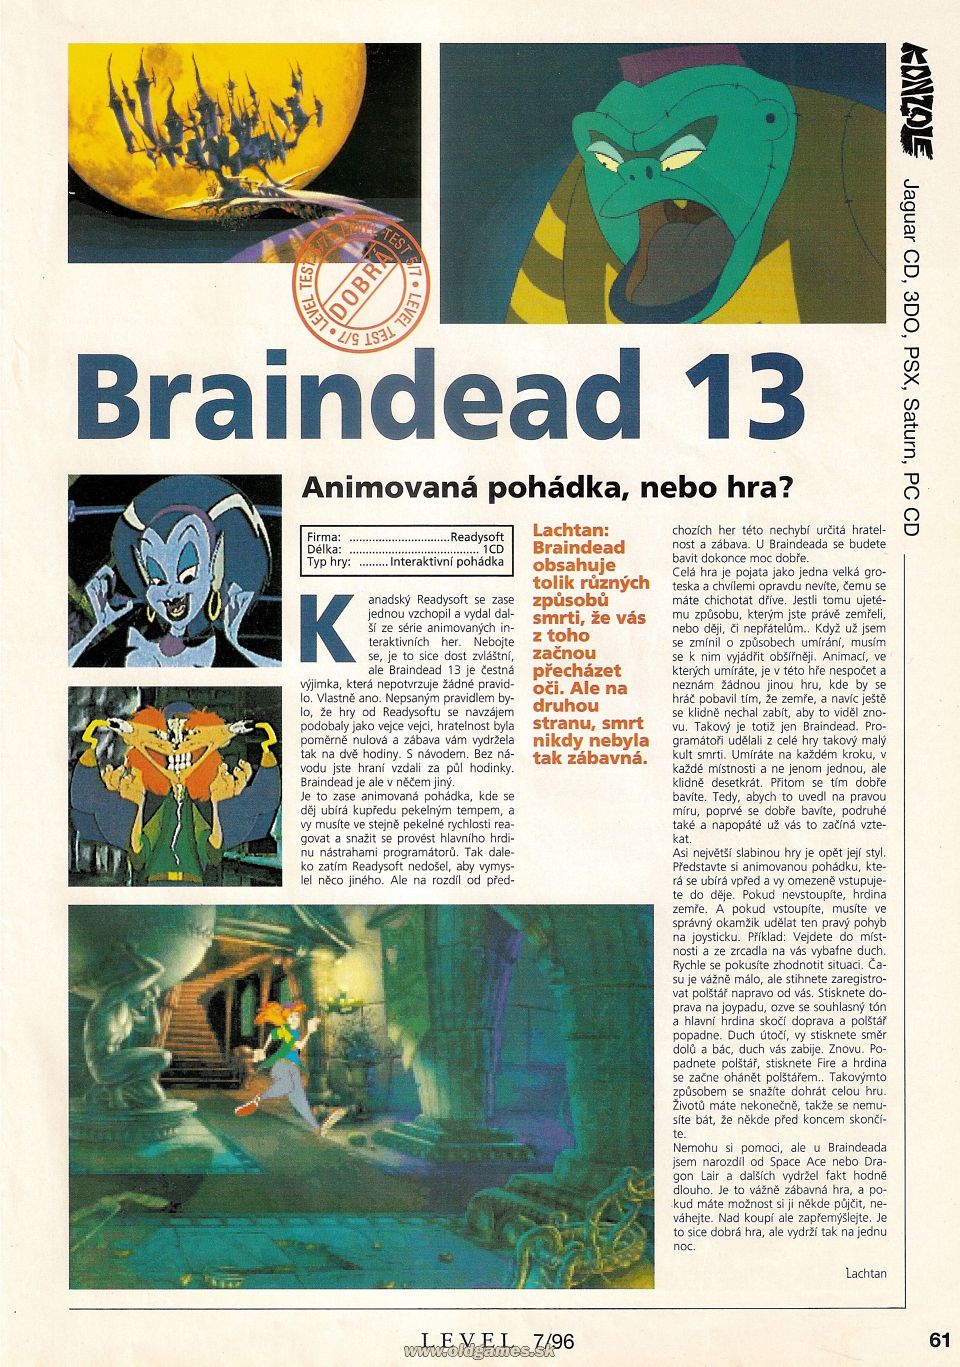 Braindead 13 (Atari Jaguar)